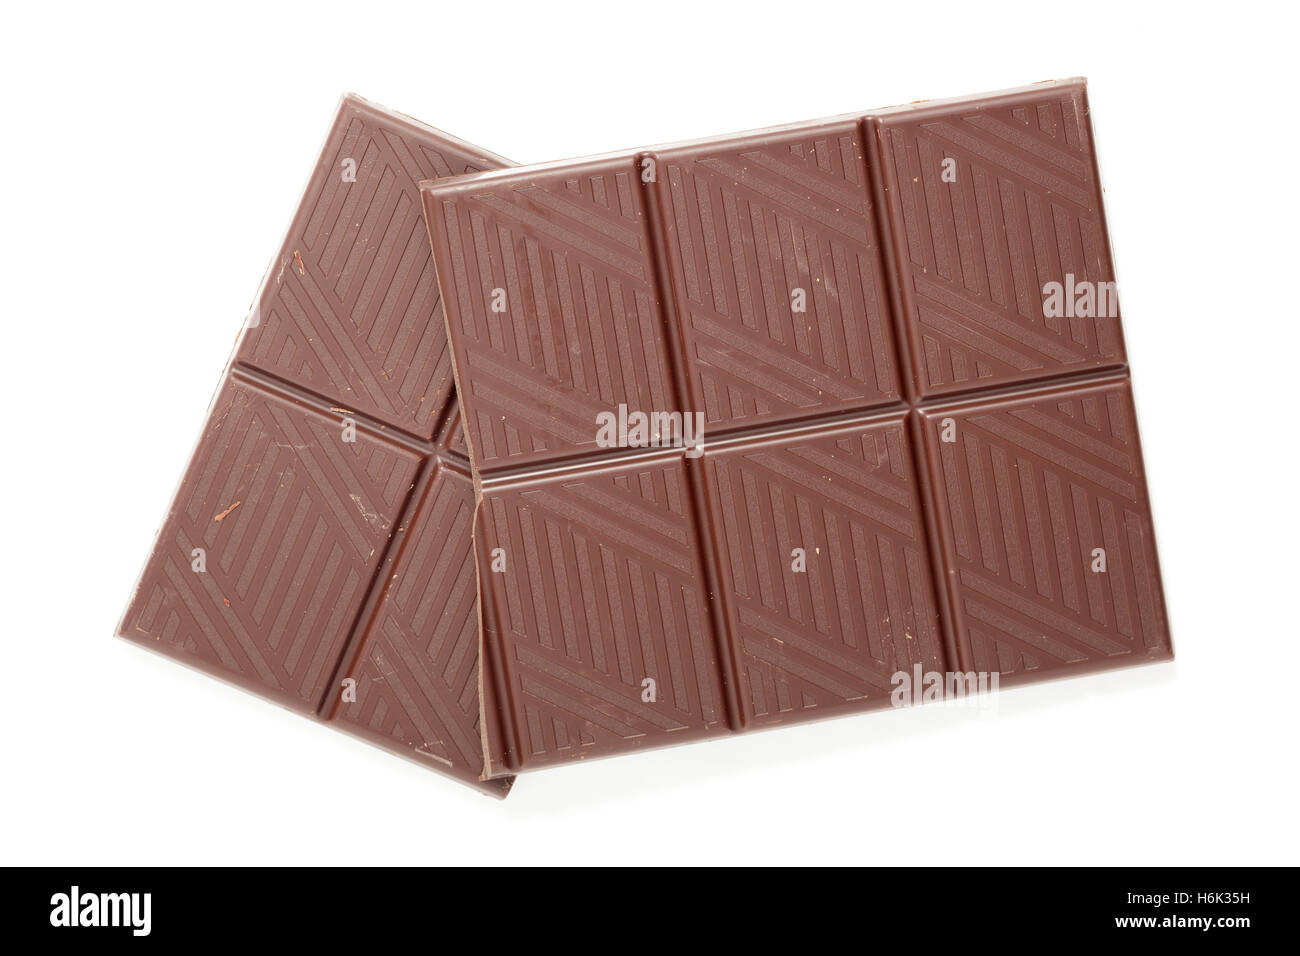 bar of chocolate Stock Photo